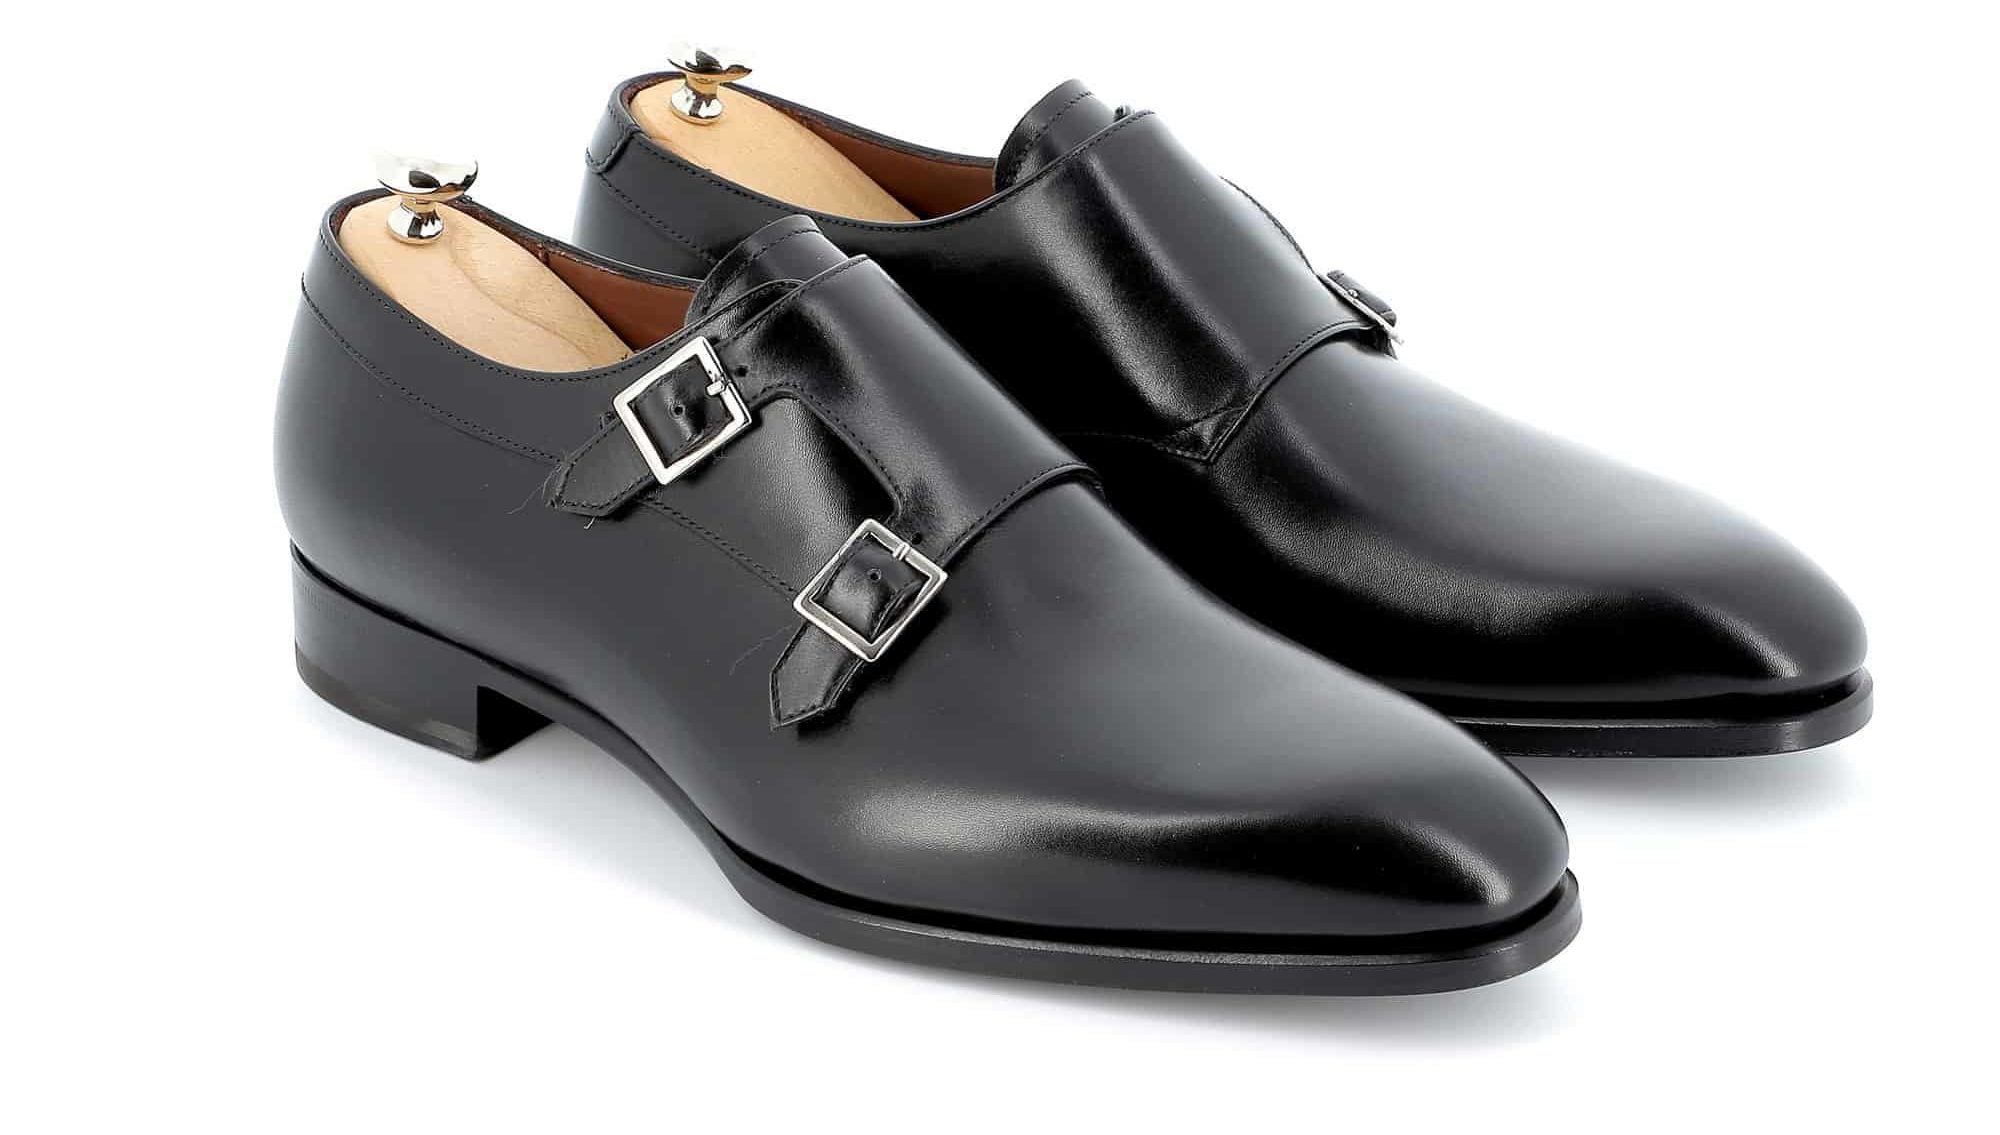 Chaussures doubles boucles Woodrow cuir noir semelles cuir